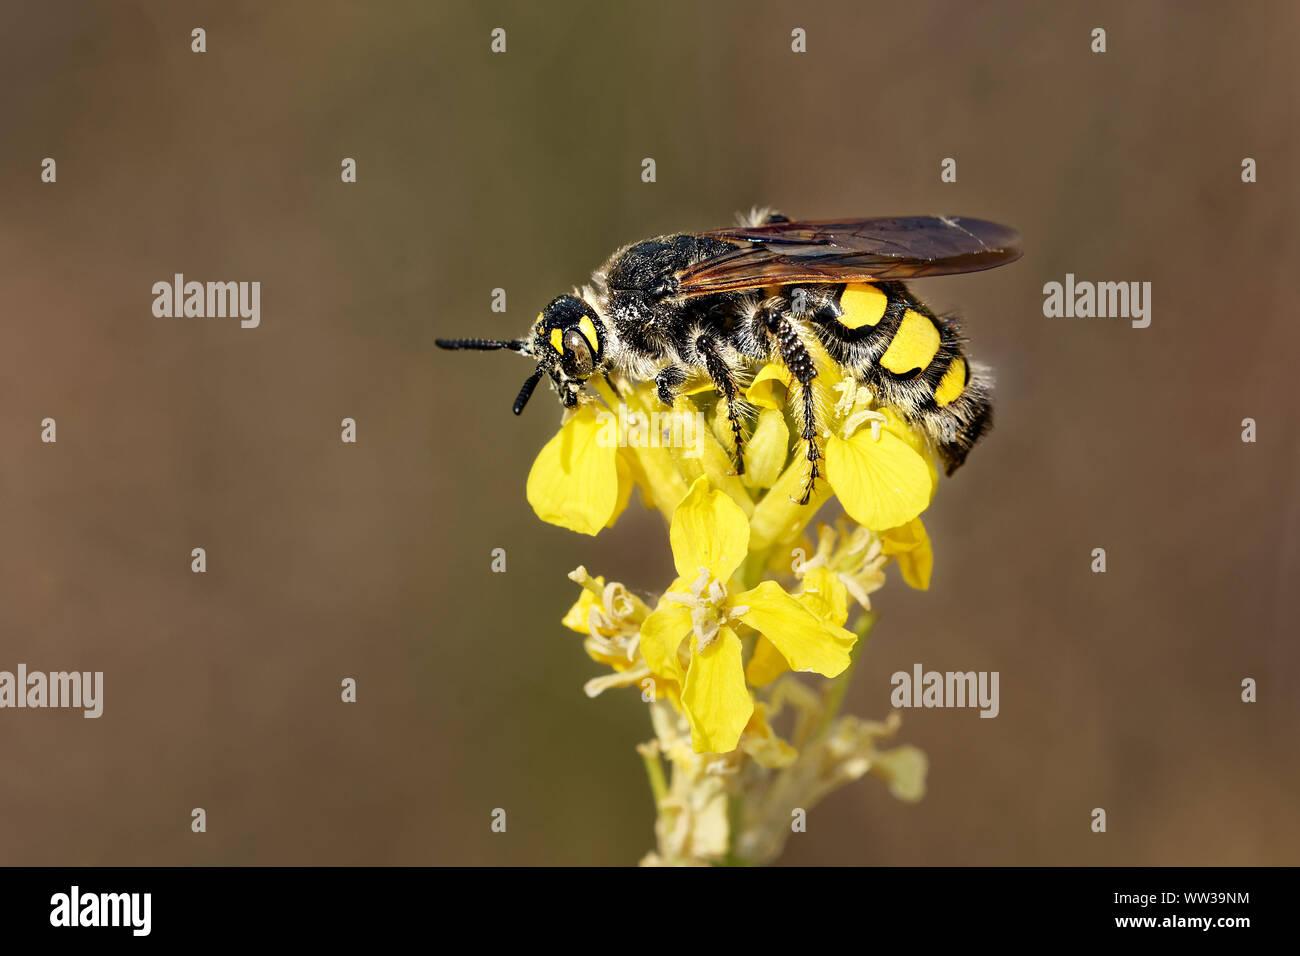 Wasps similar fotografías e imágenes de alta resolución - Alamy